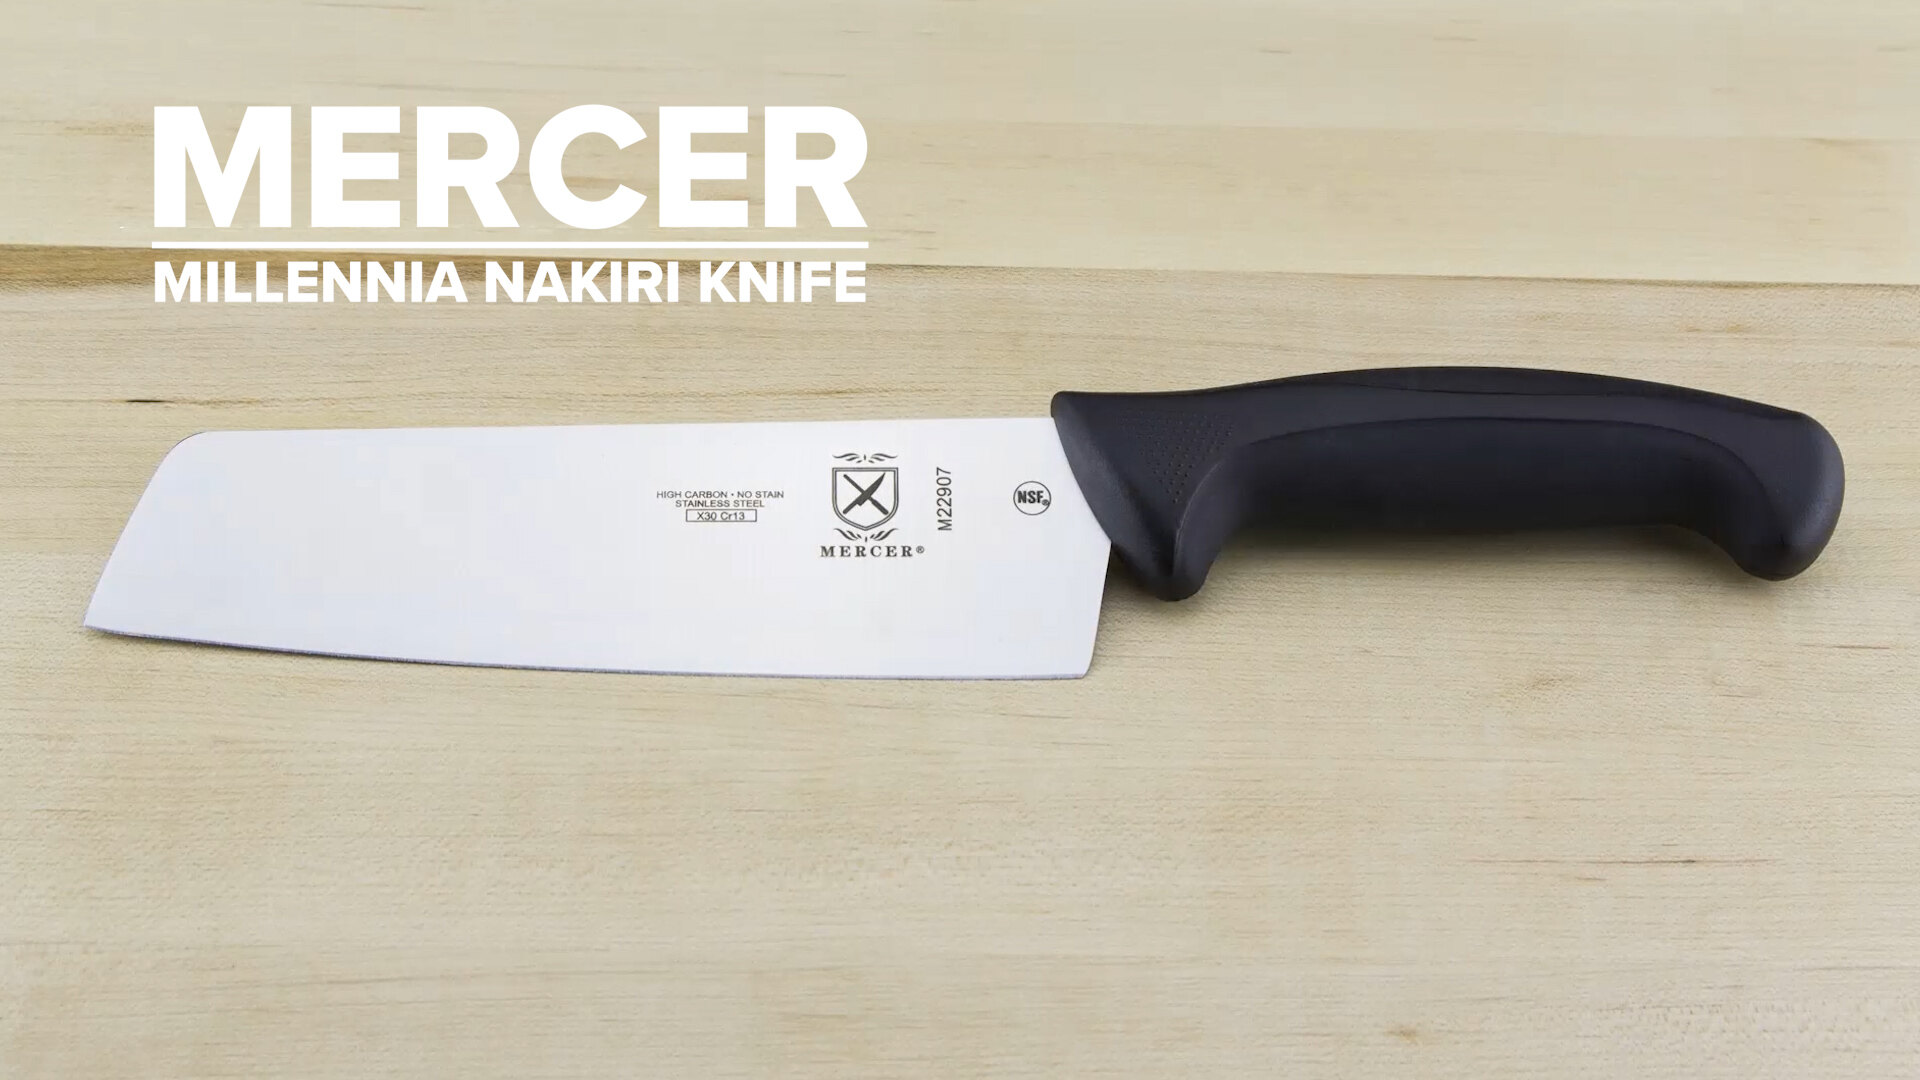 Mercer Genesis 7-in. Nakiri Knife